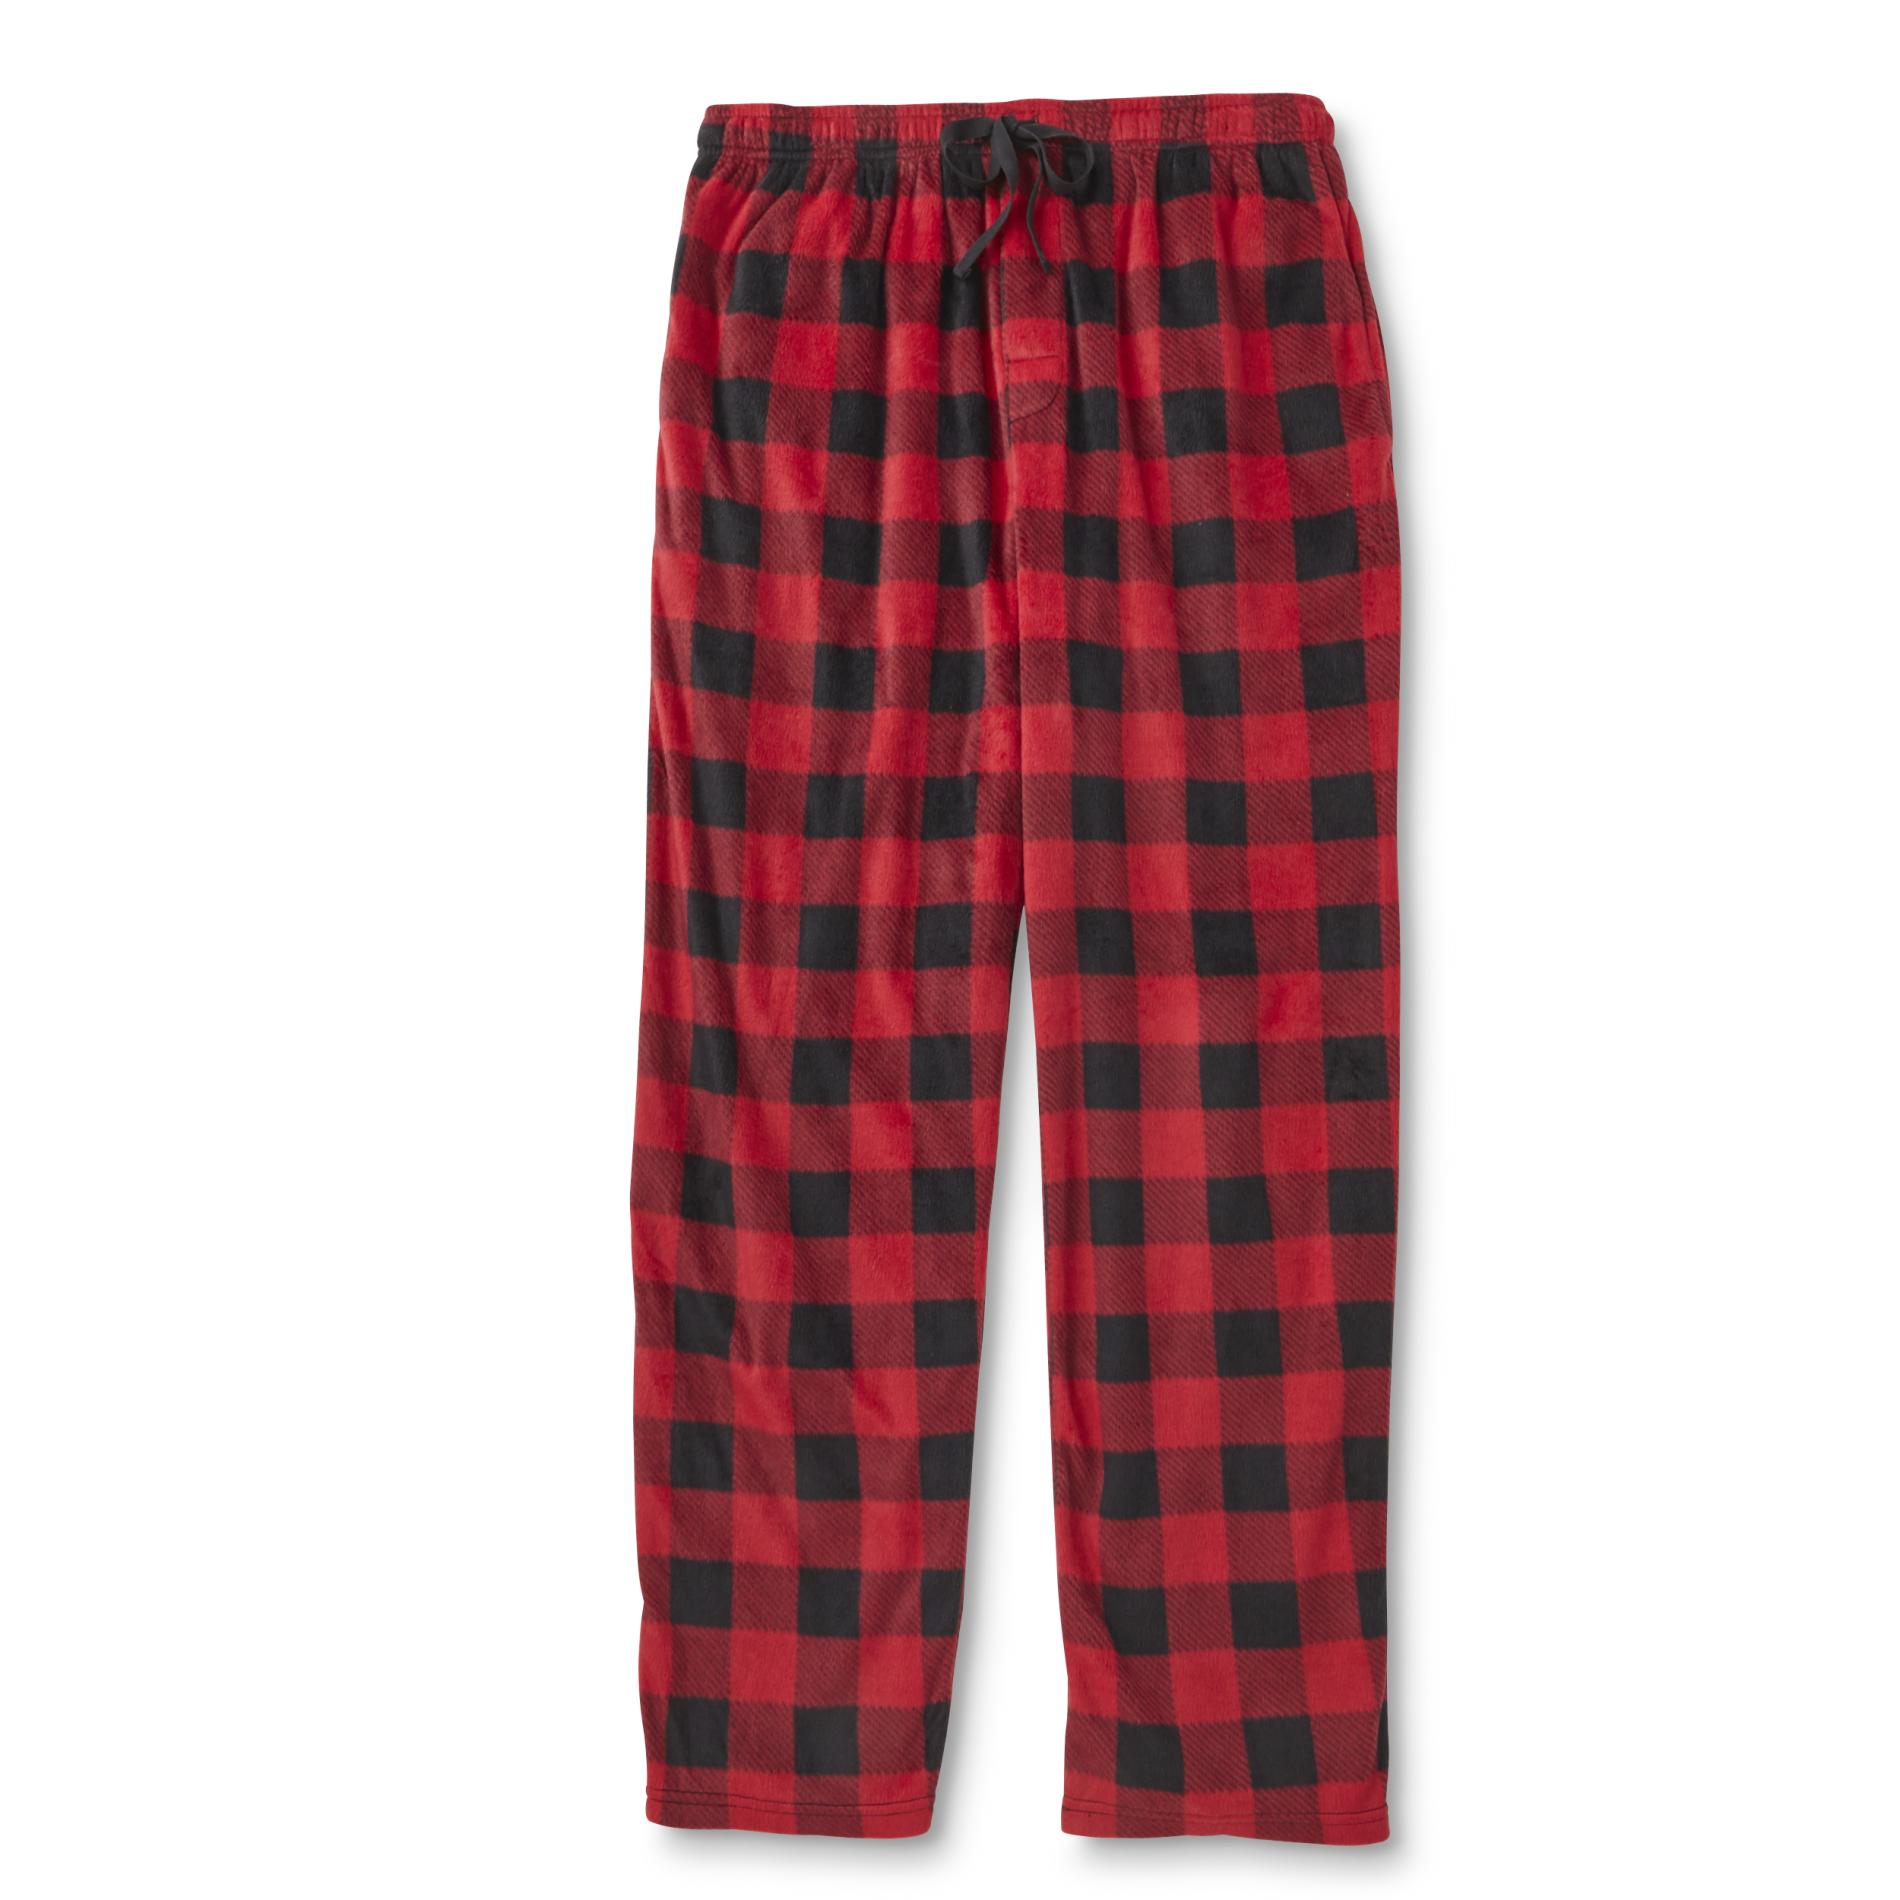 Joe Boxer Men's Microfleece Pajama Pants - Buffalo Plaid